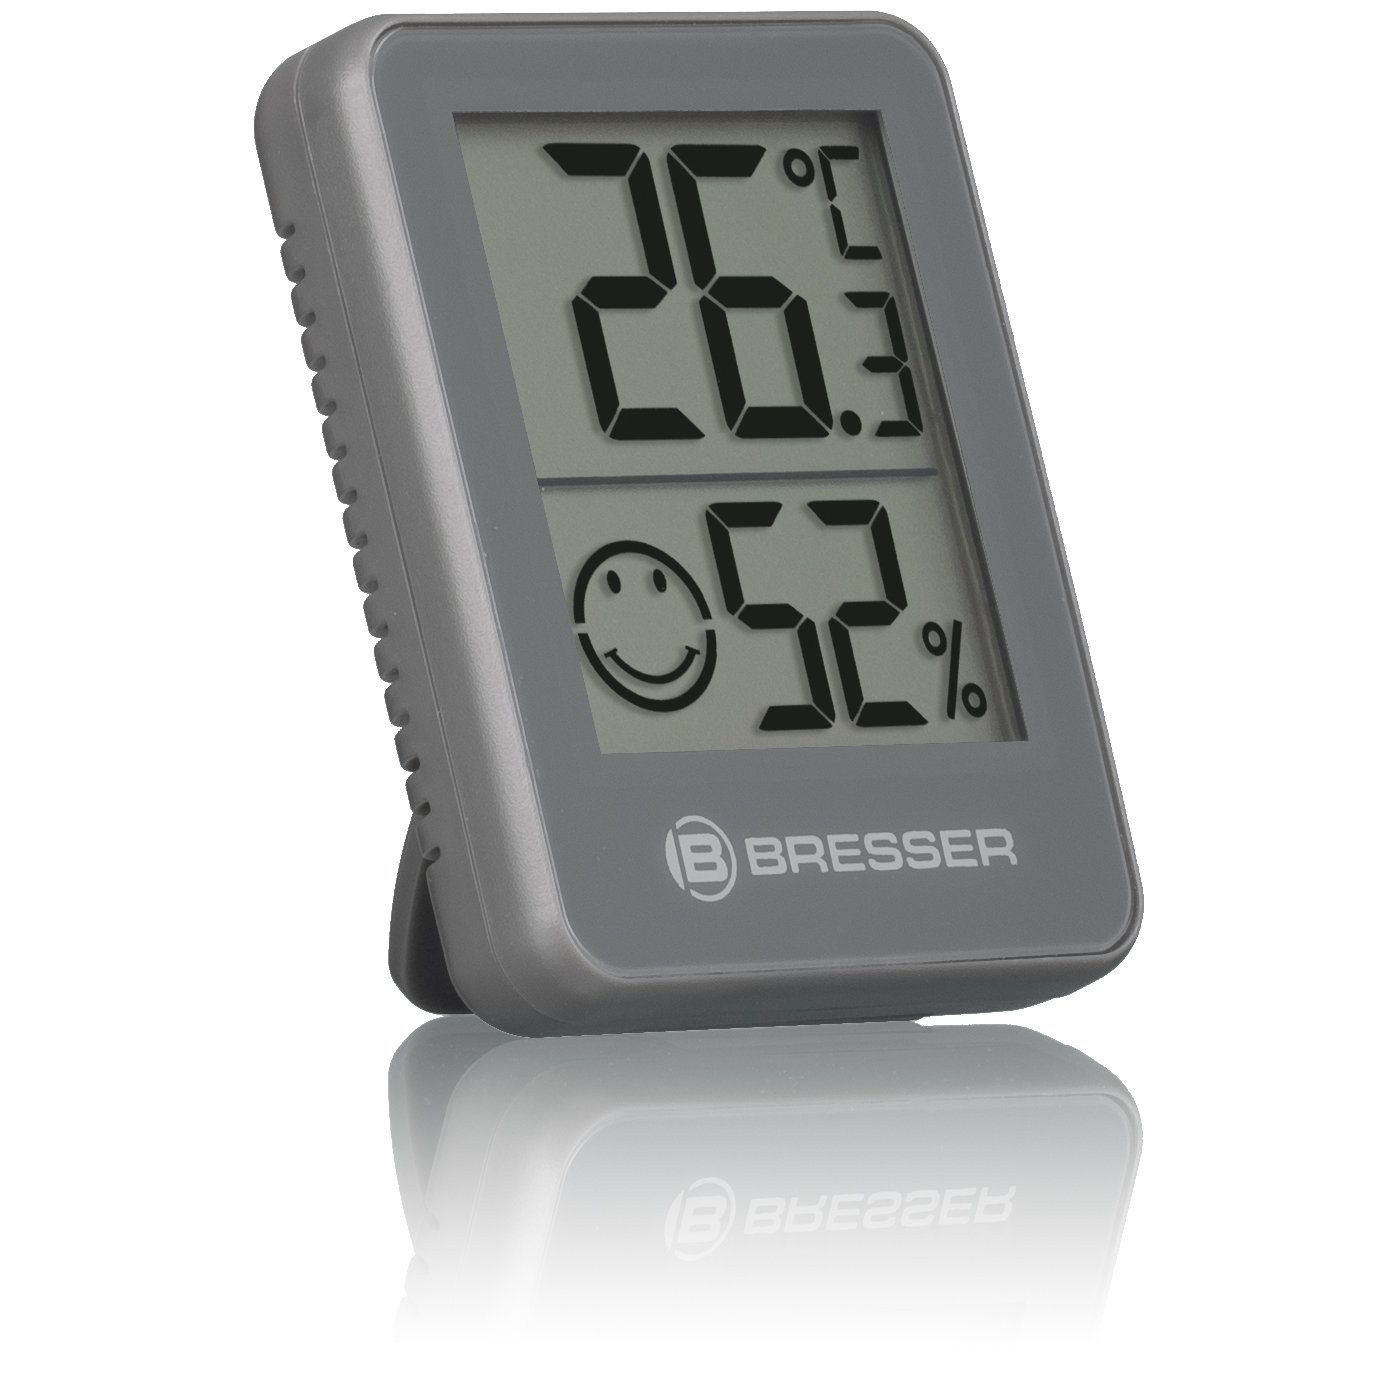 BRESSER Hygrometer Temeo Hygro Indikator 6er-Set Thermo-/Hygrometer